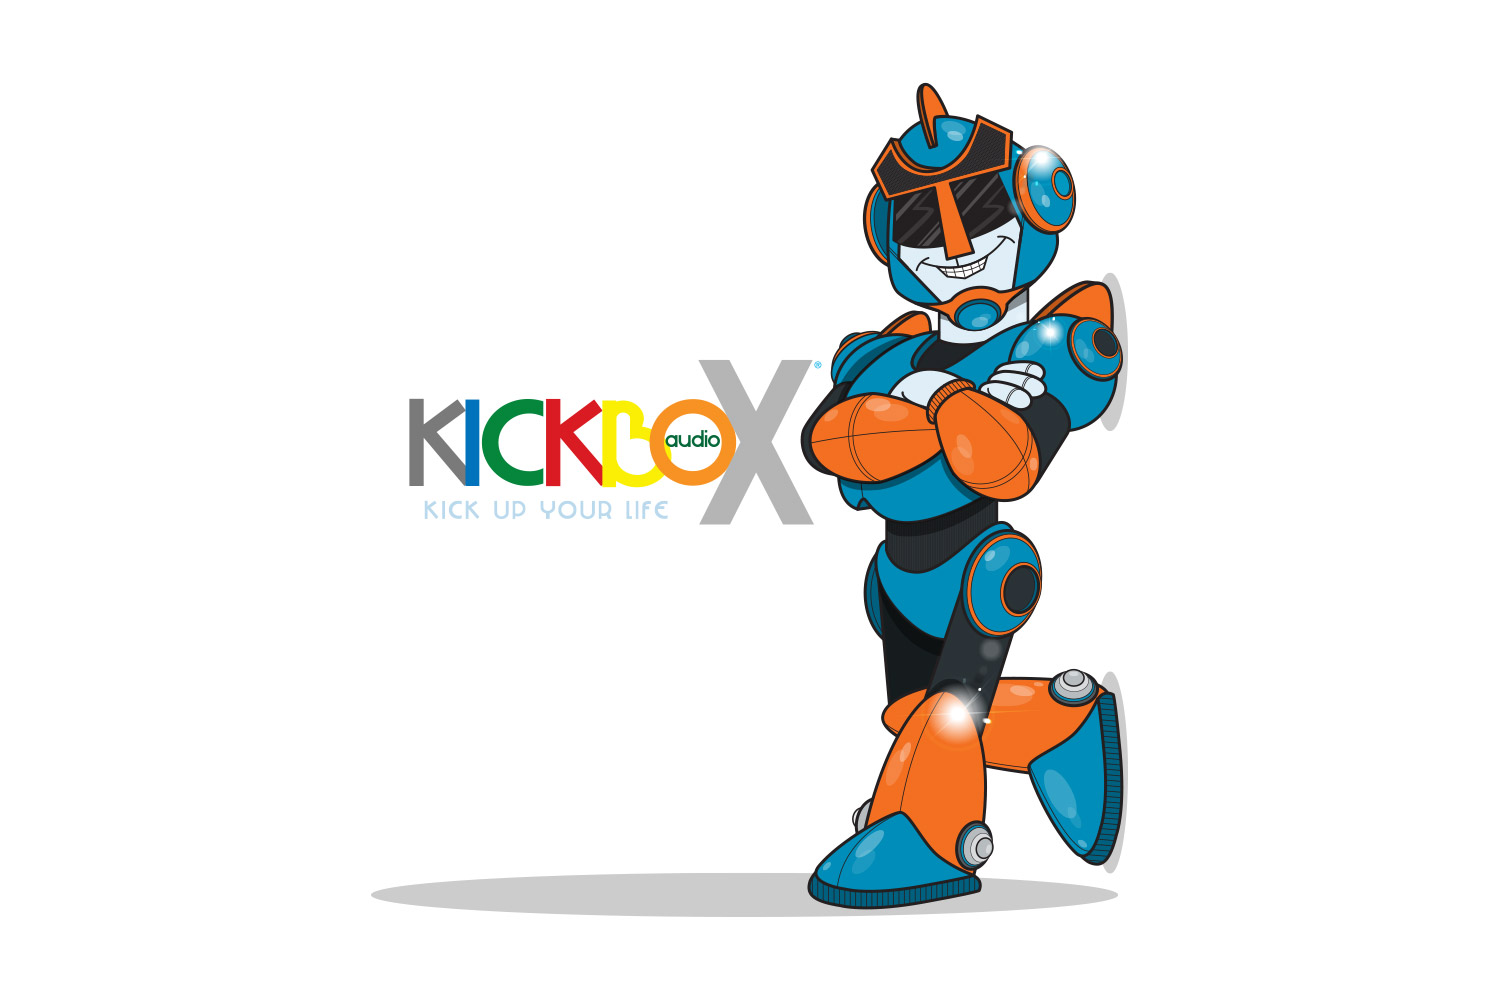 Kickbox Audio corporate mascot illustration